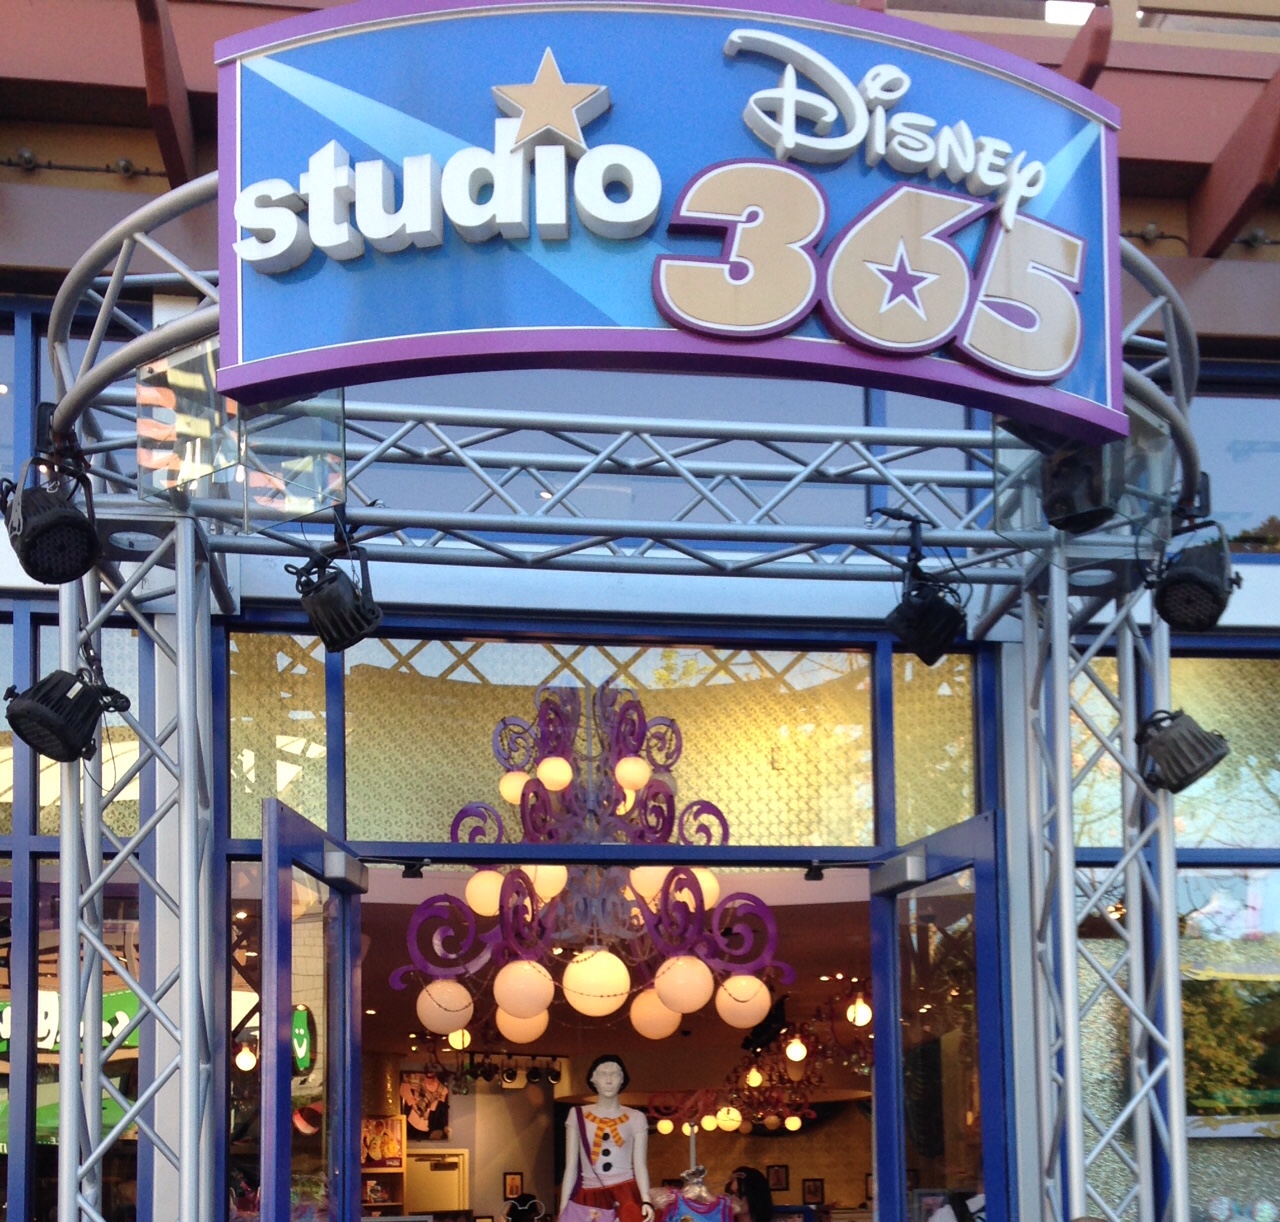 Studio Disney 365 at Downtown Disney Anaheim